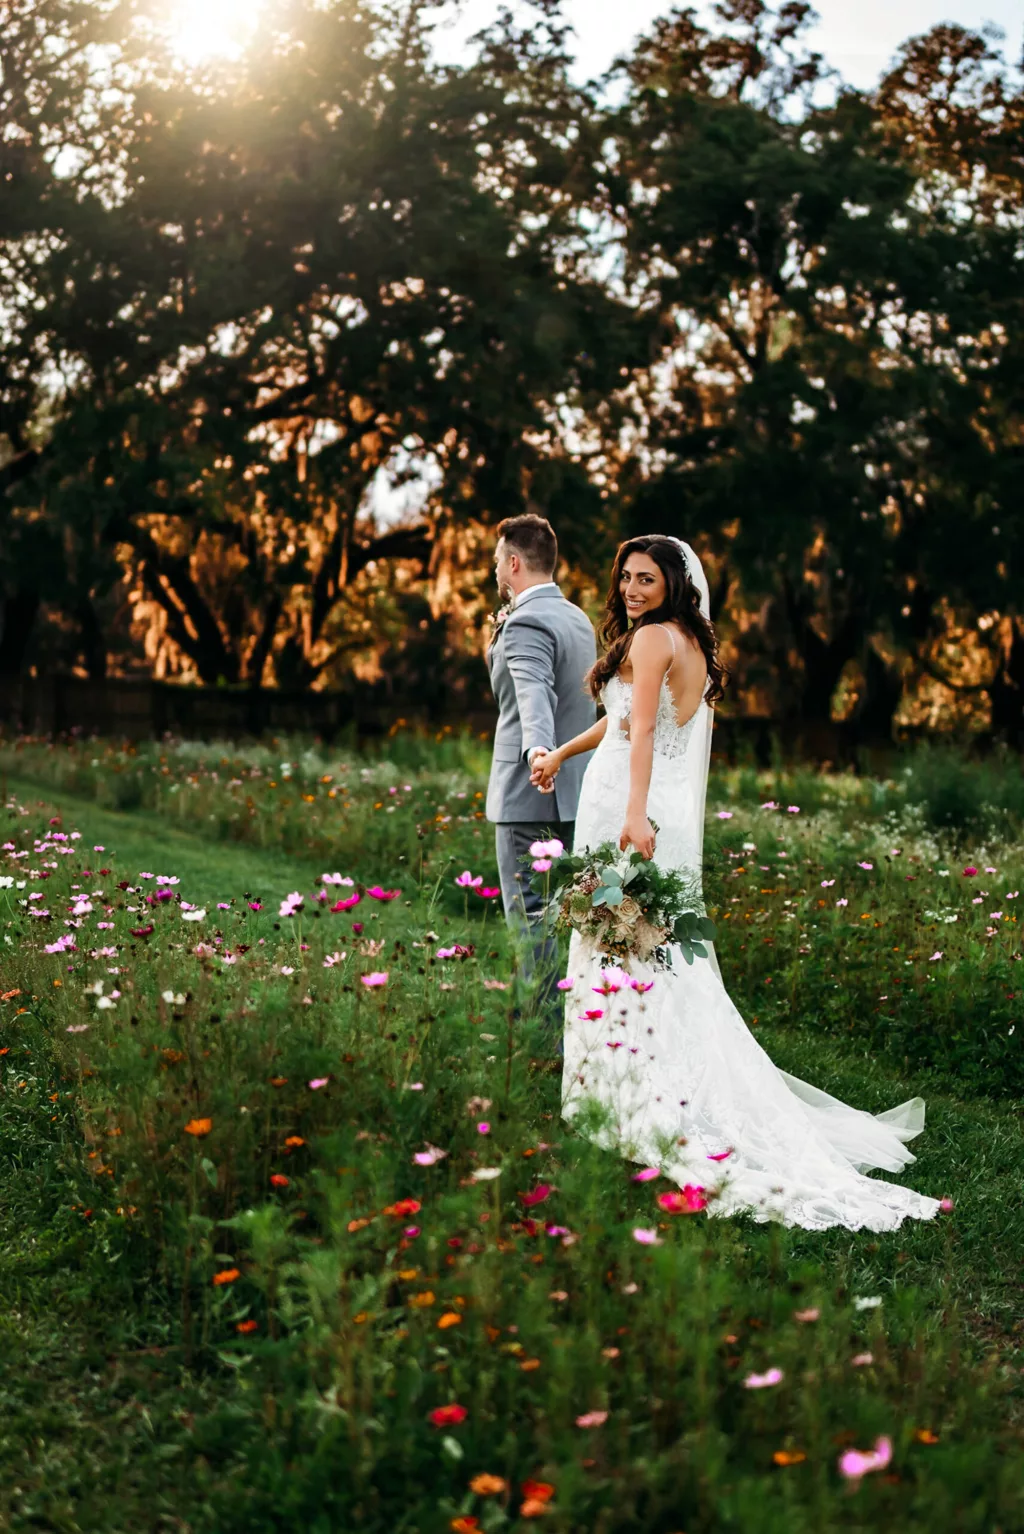 Bride and Groom Walking Through Wildflower Garden Sunset Wedding Portrait | Tampa Bay Photographer Sabrina Autumn Photography | Florida Event Venue Ever After Farms Flower Wedding Barn